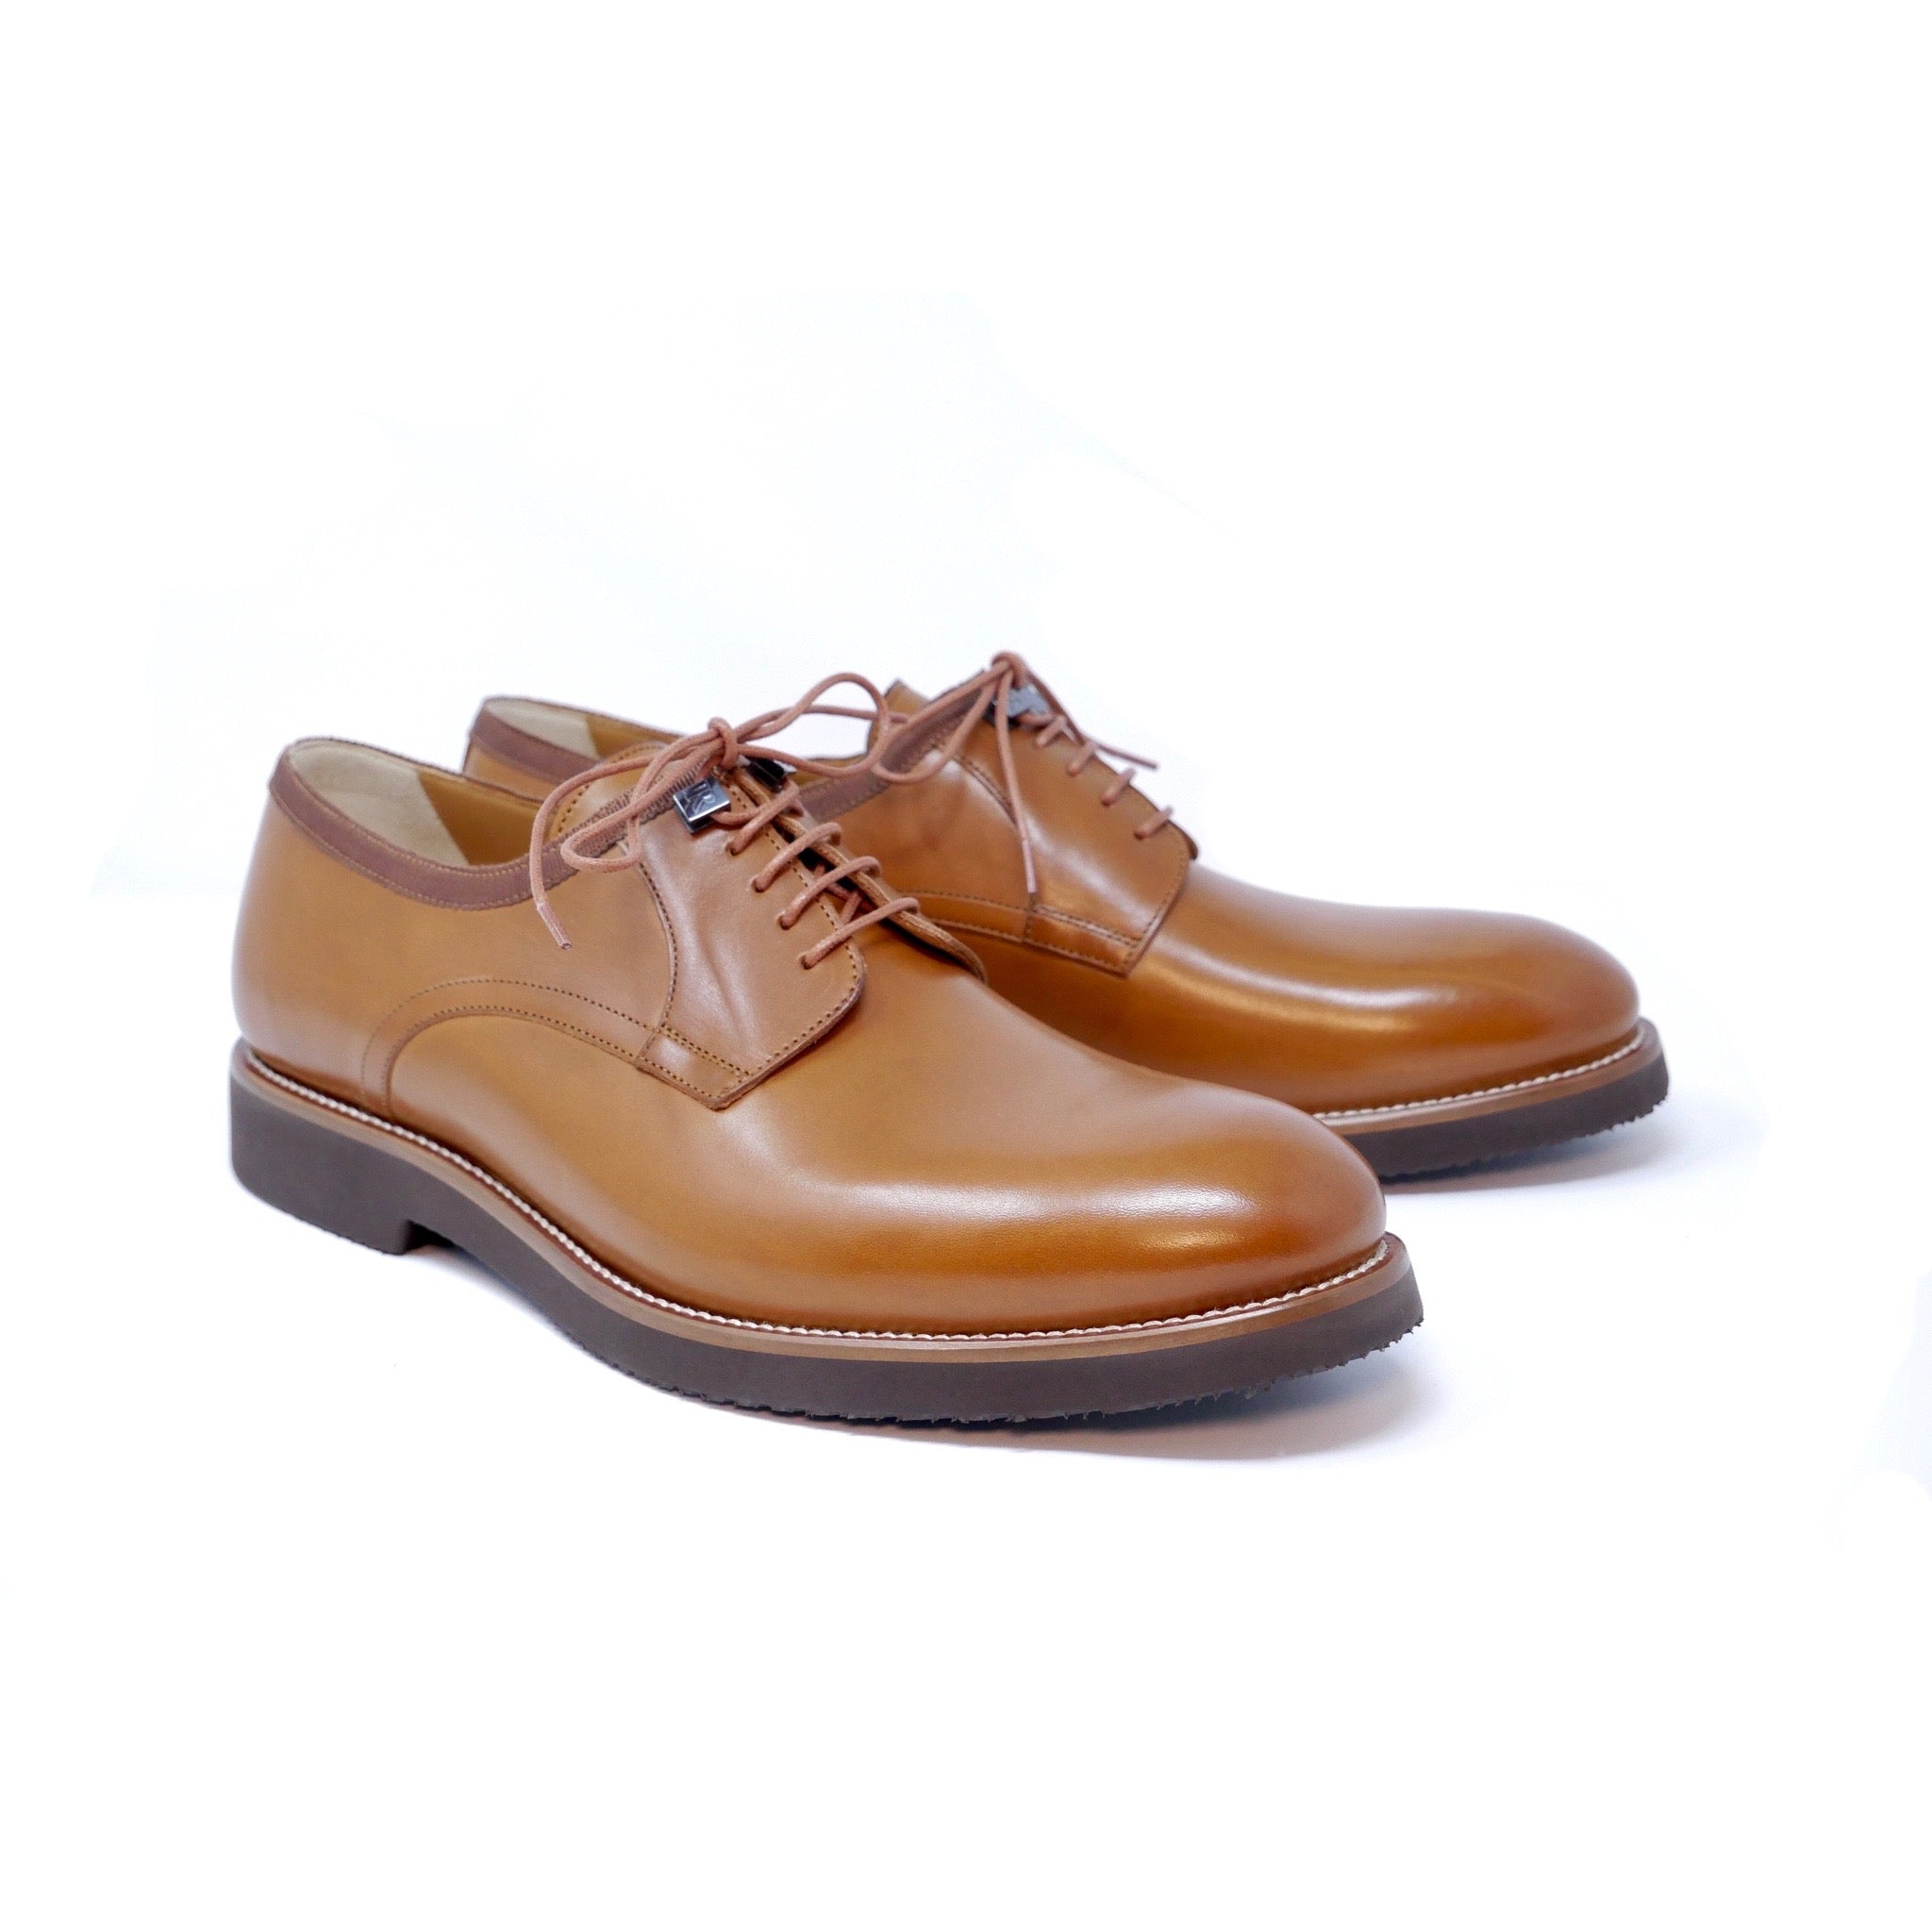 Martel+Ram | Classic Men's Shoes | The Future of Footwear